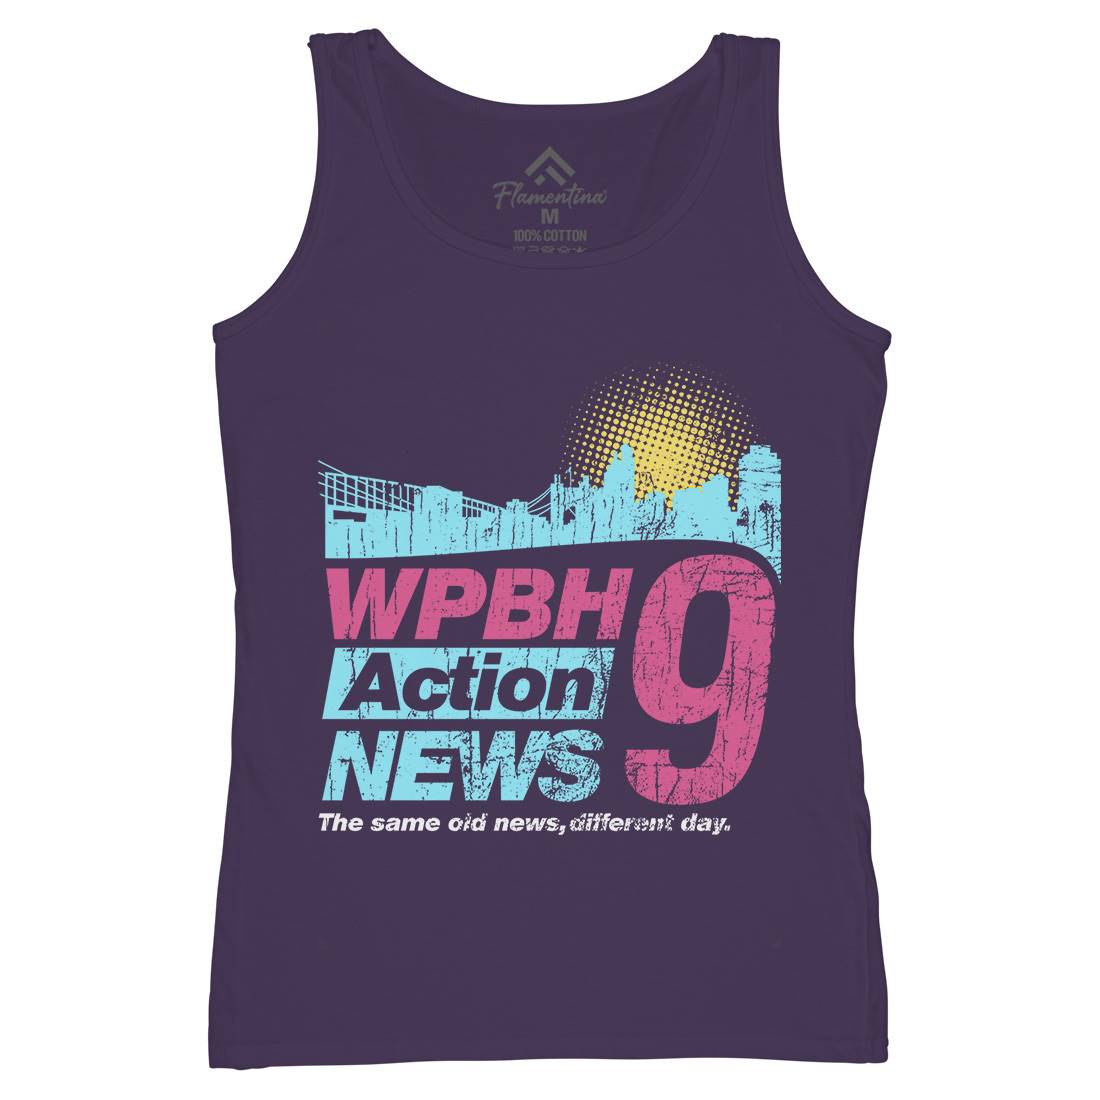 Wpbh Action Womens Organic Tank Top Vest Retro D342